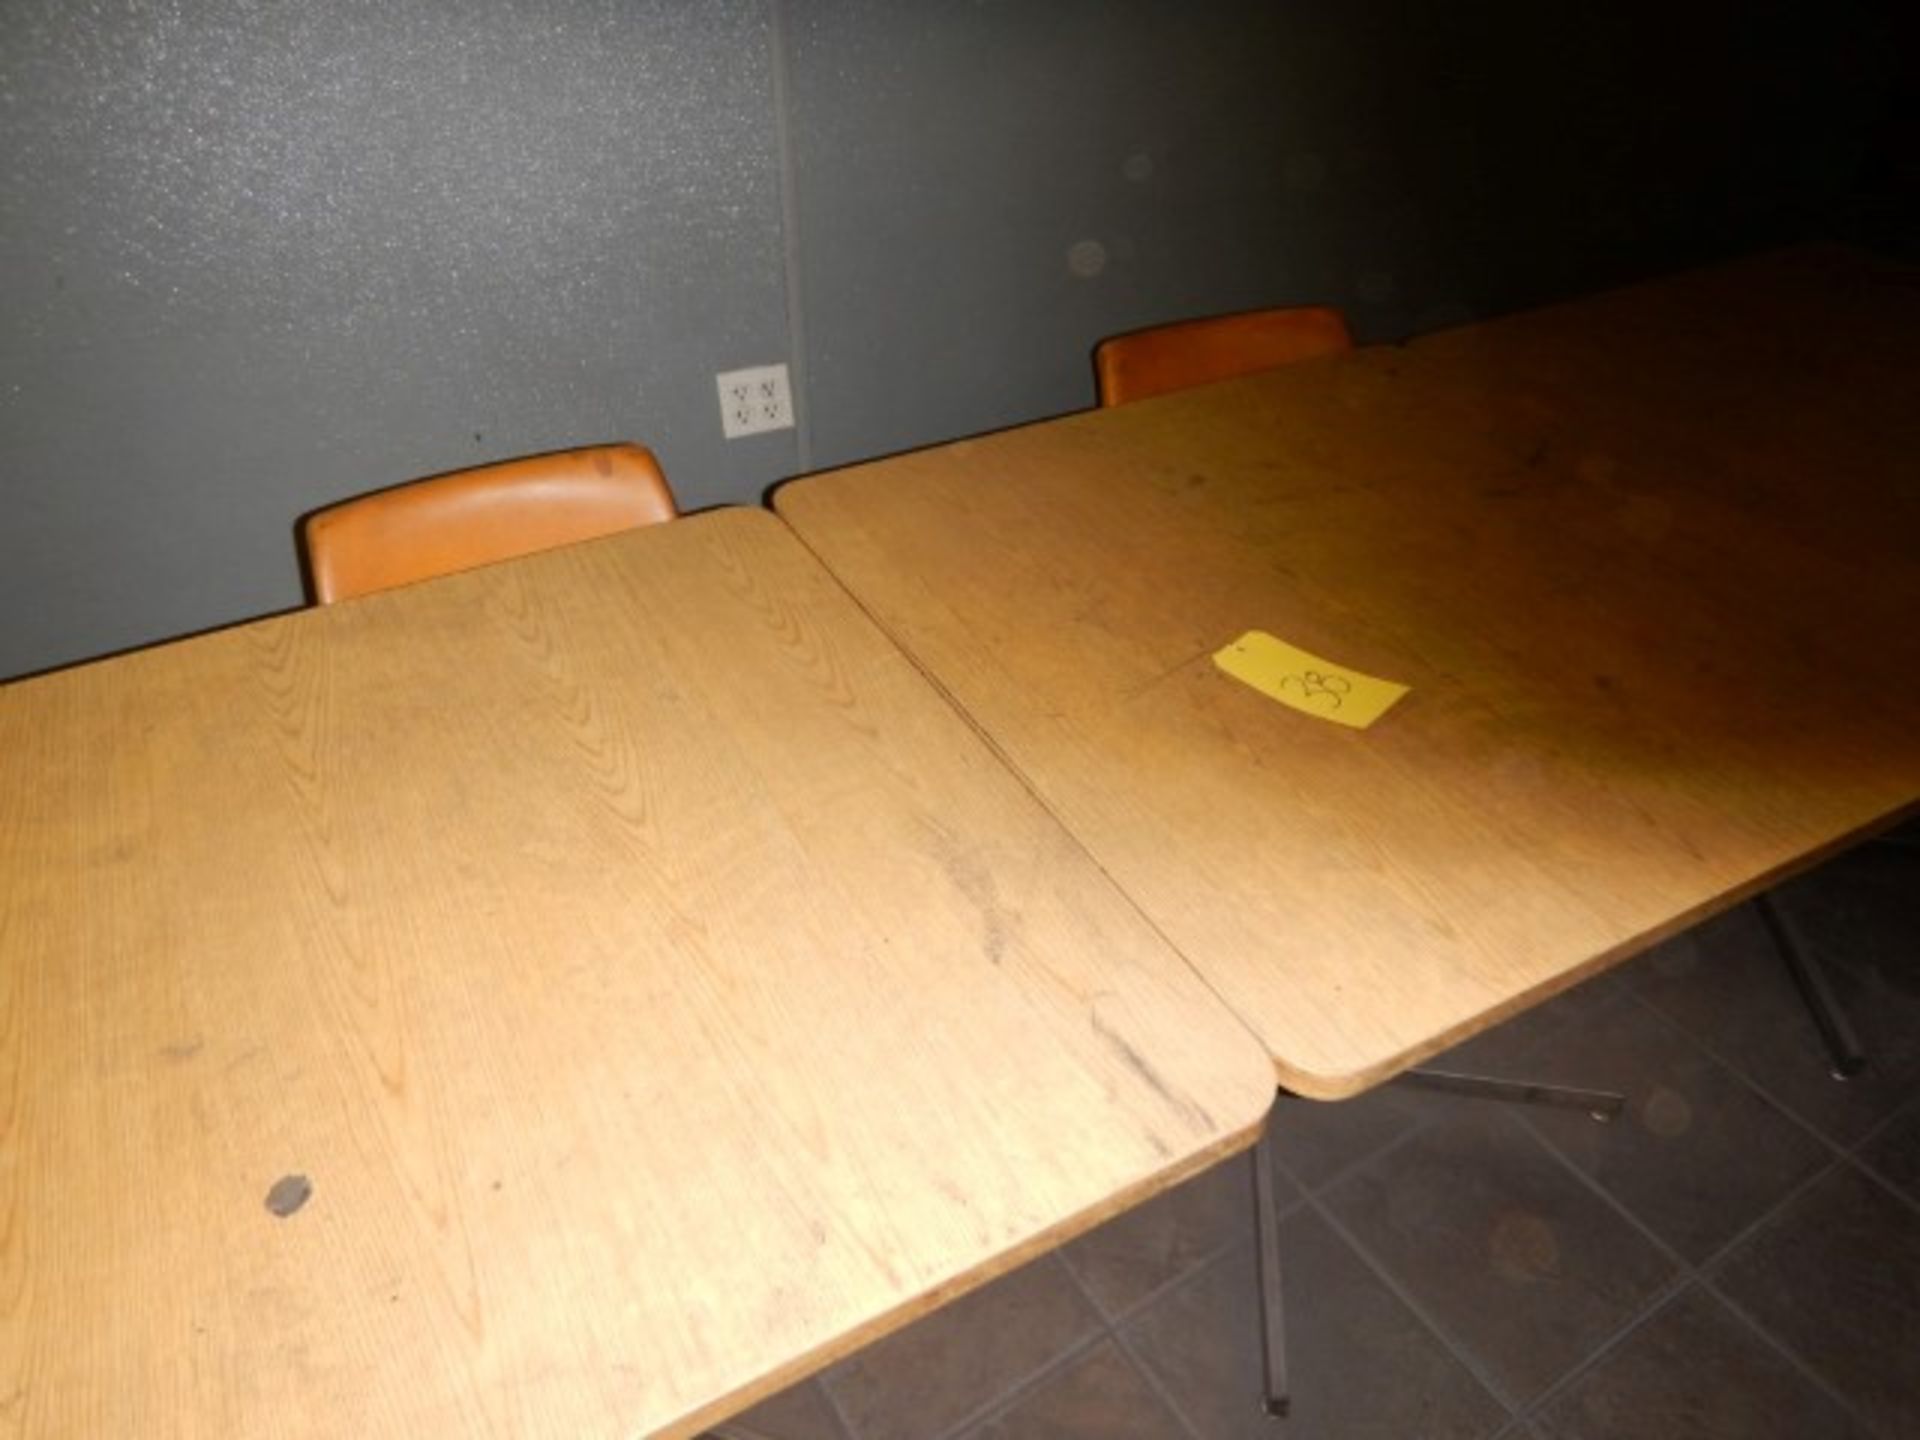 Breakroom Tables - Image 2 of 2